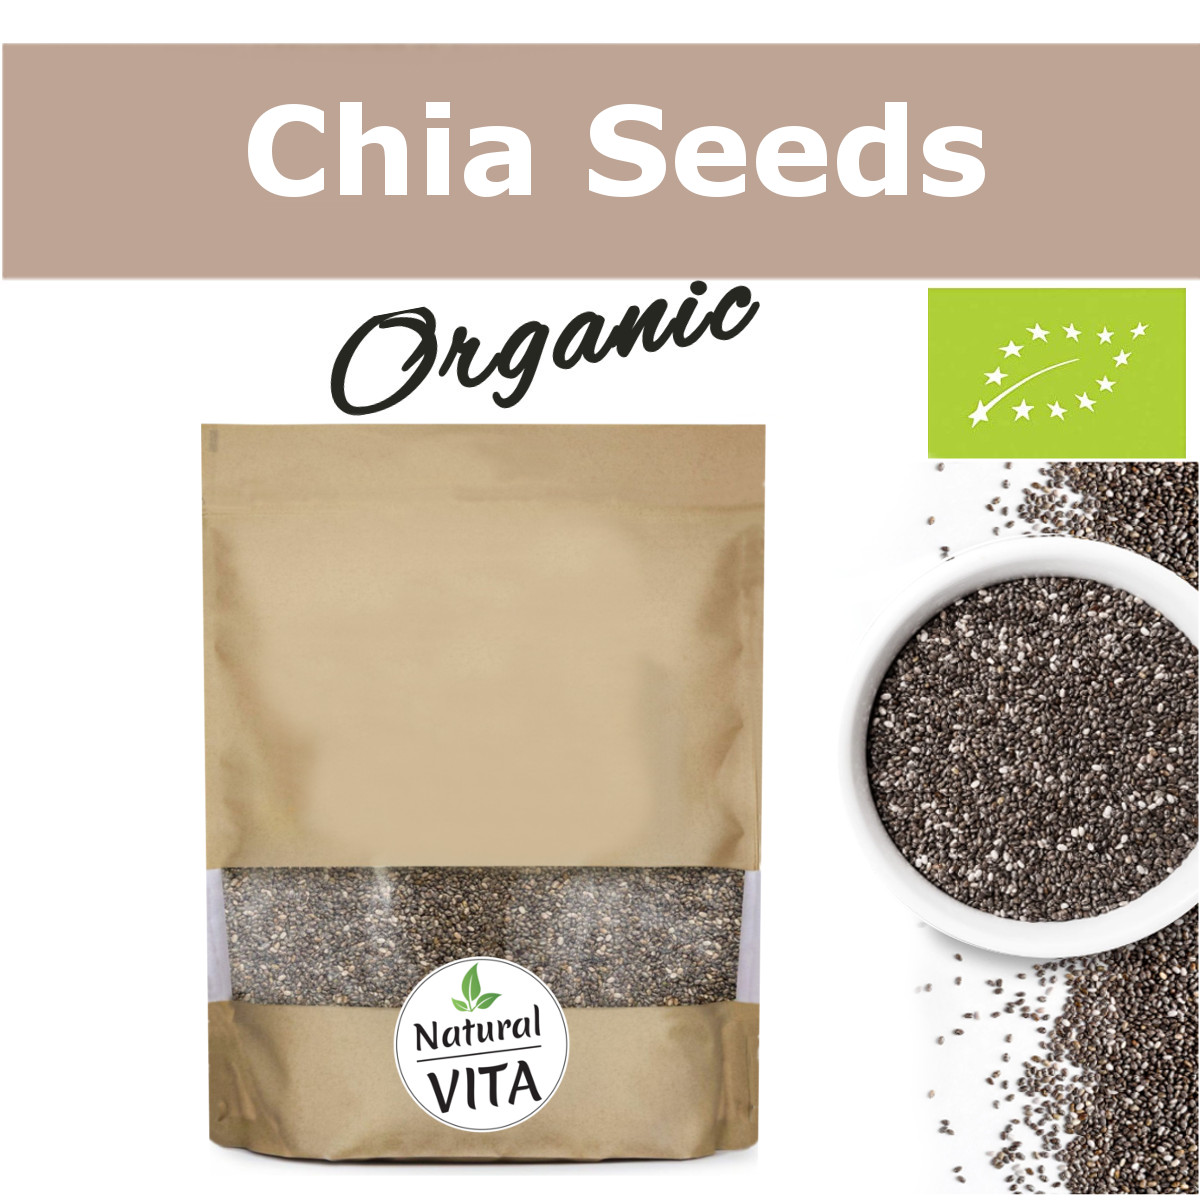 Organic Whole Dark Chia Seeds